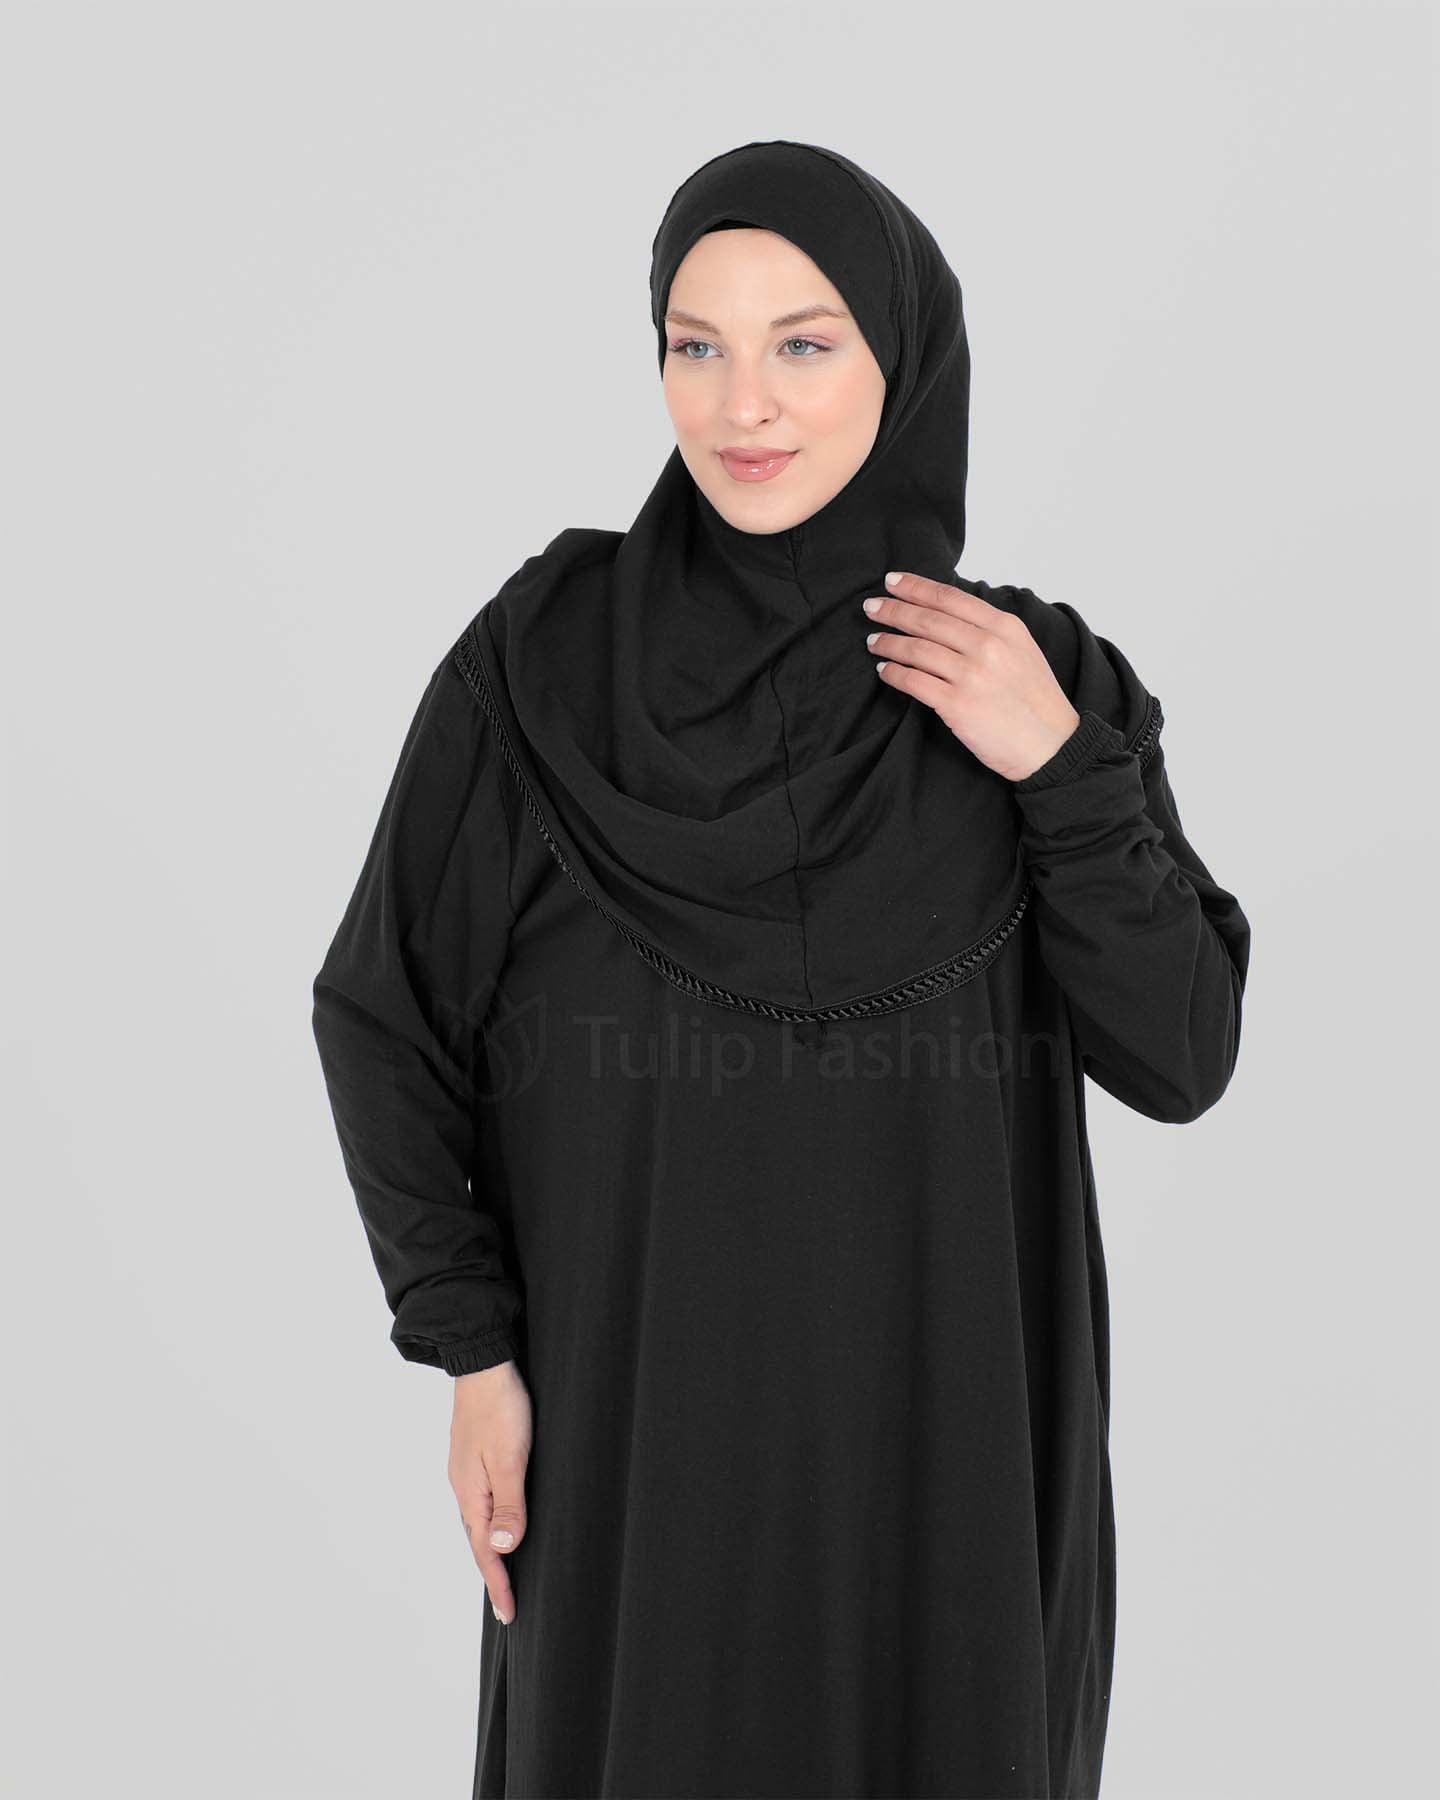 Prayer Clothes Safia - Black